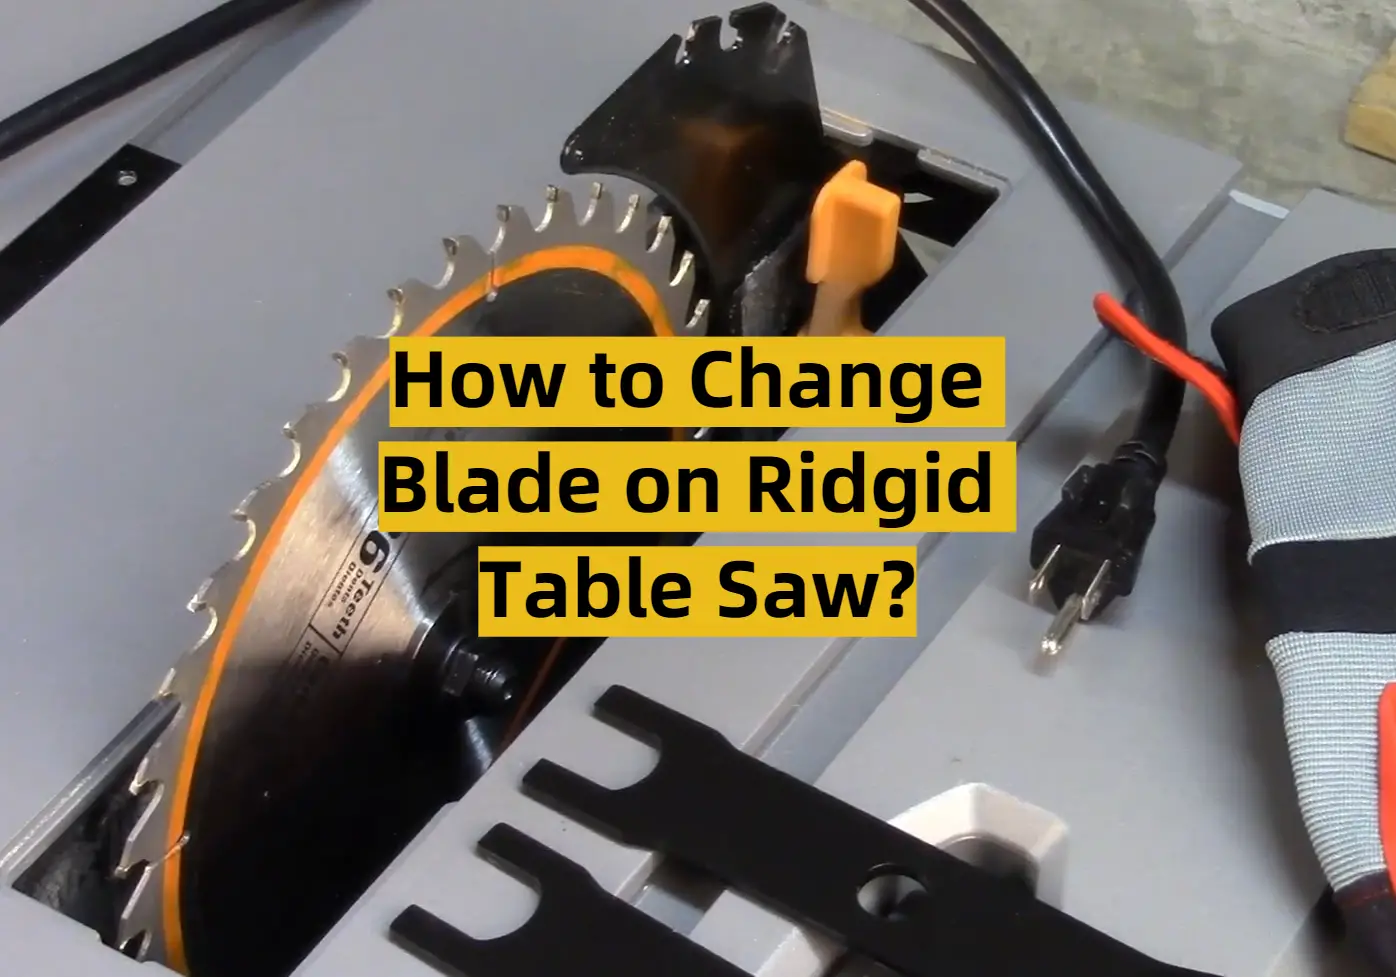 How to Change Blade on Ridgid Table Saw?